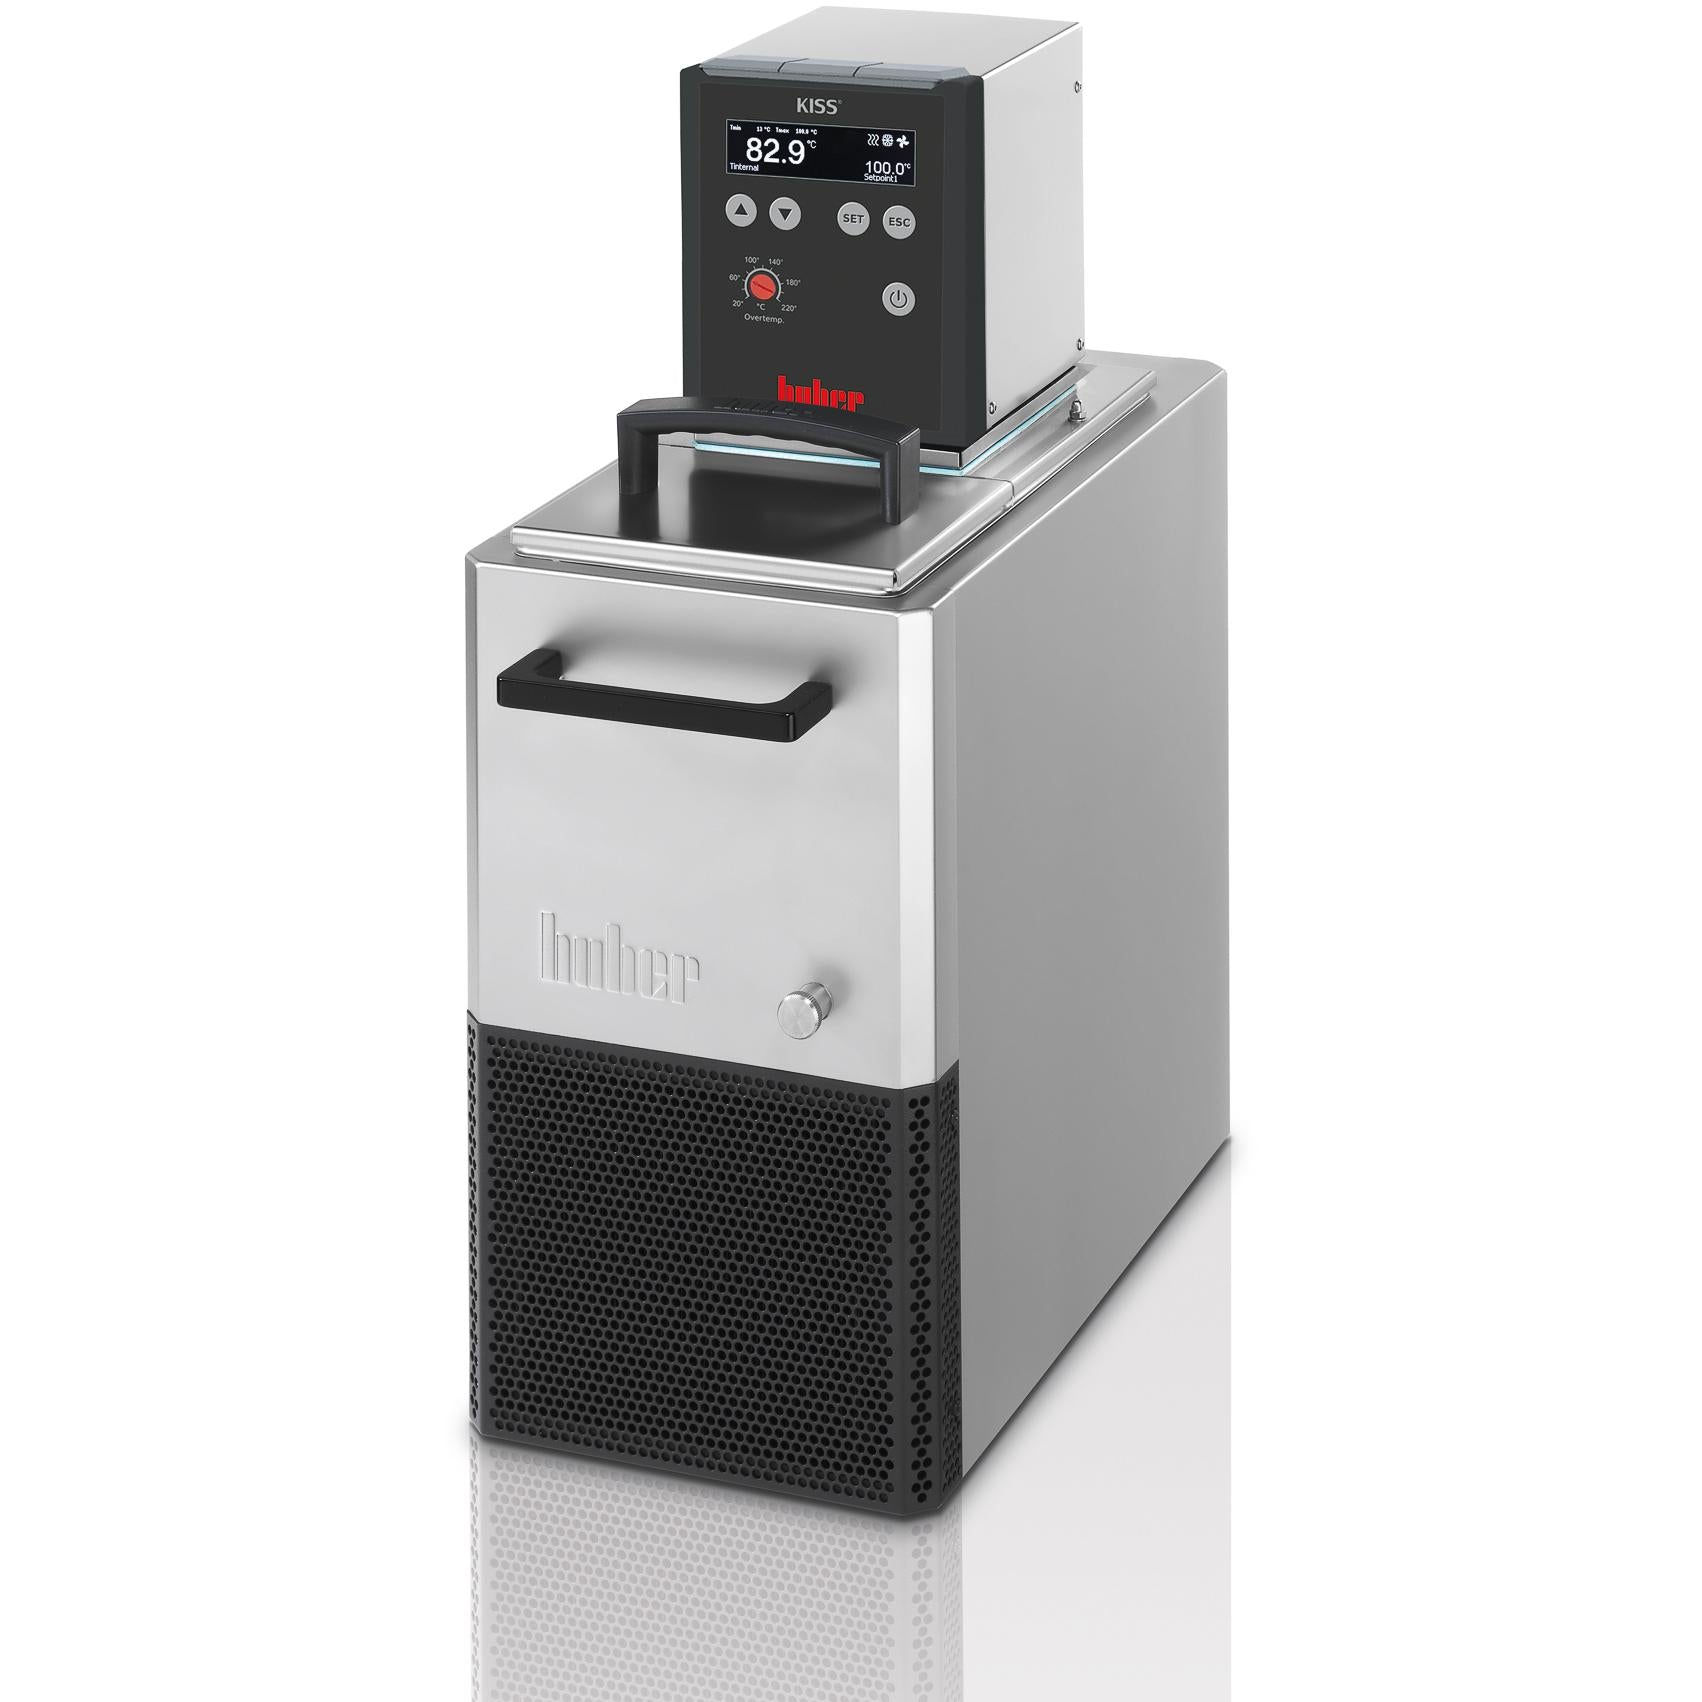 Huber KISS K6 Refrigerated Heating Circulators